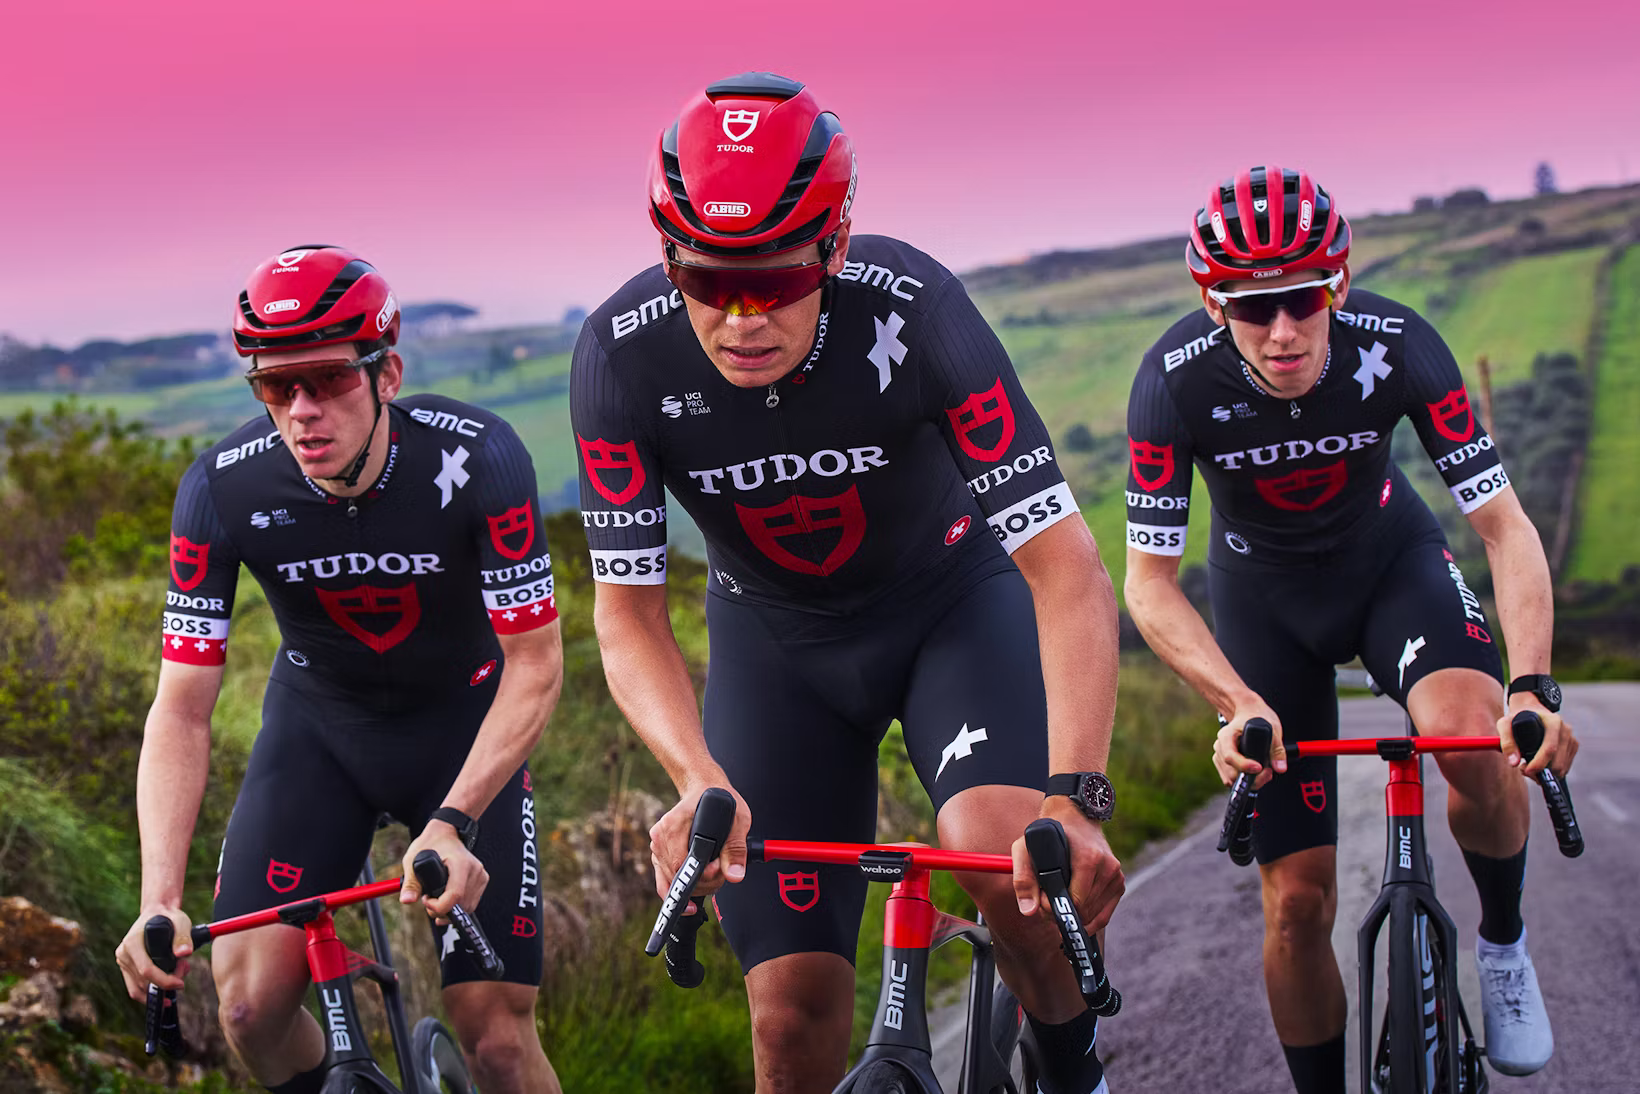 Introducing the Tudor Pelagos FXD Chrono 'Cycling Edition' at the Giro d'Italia